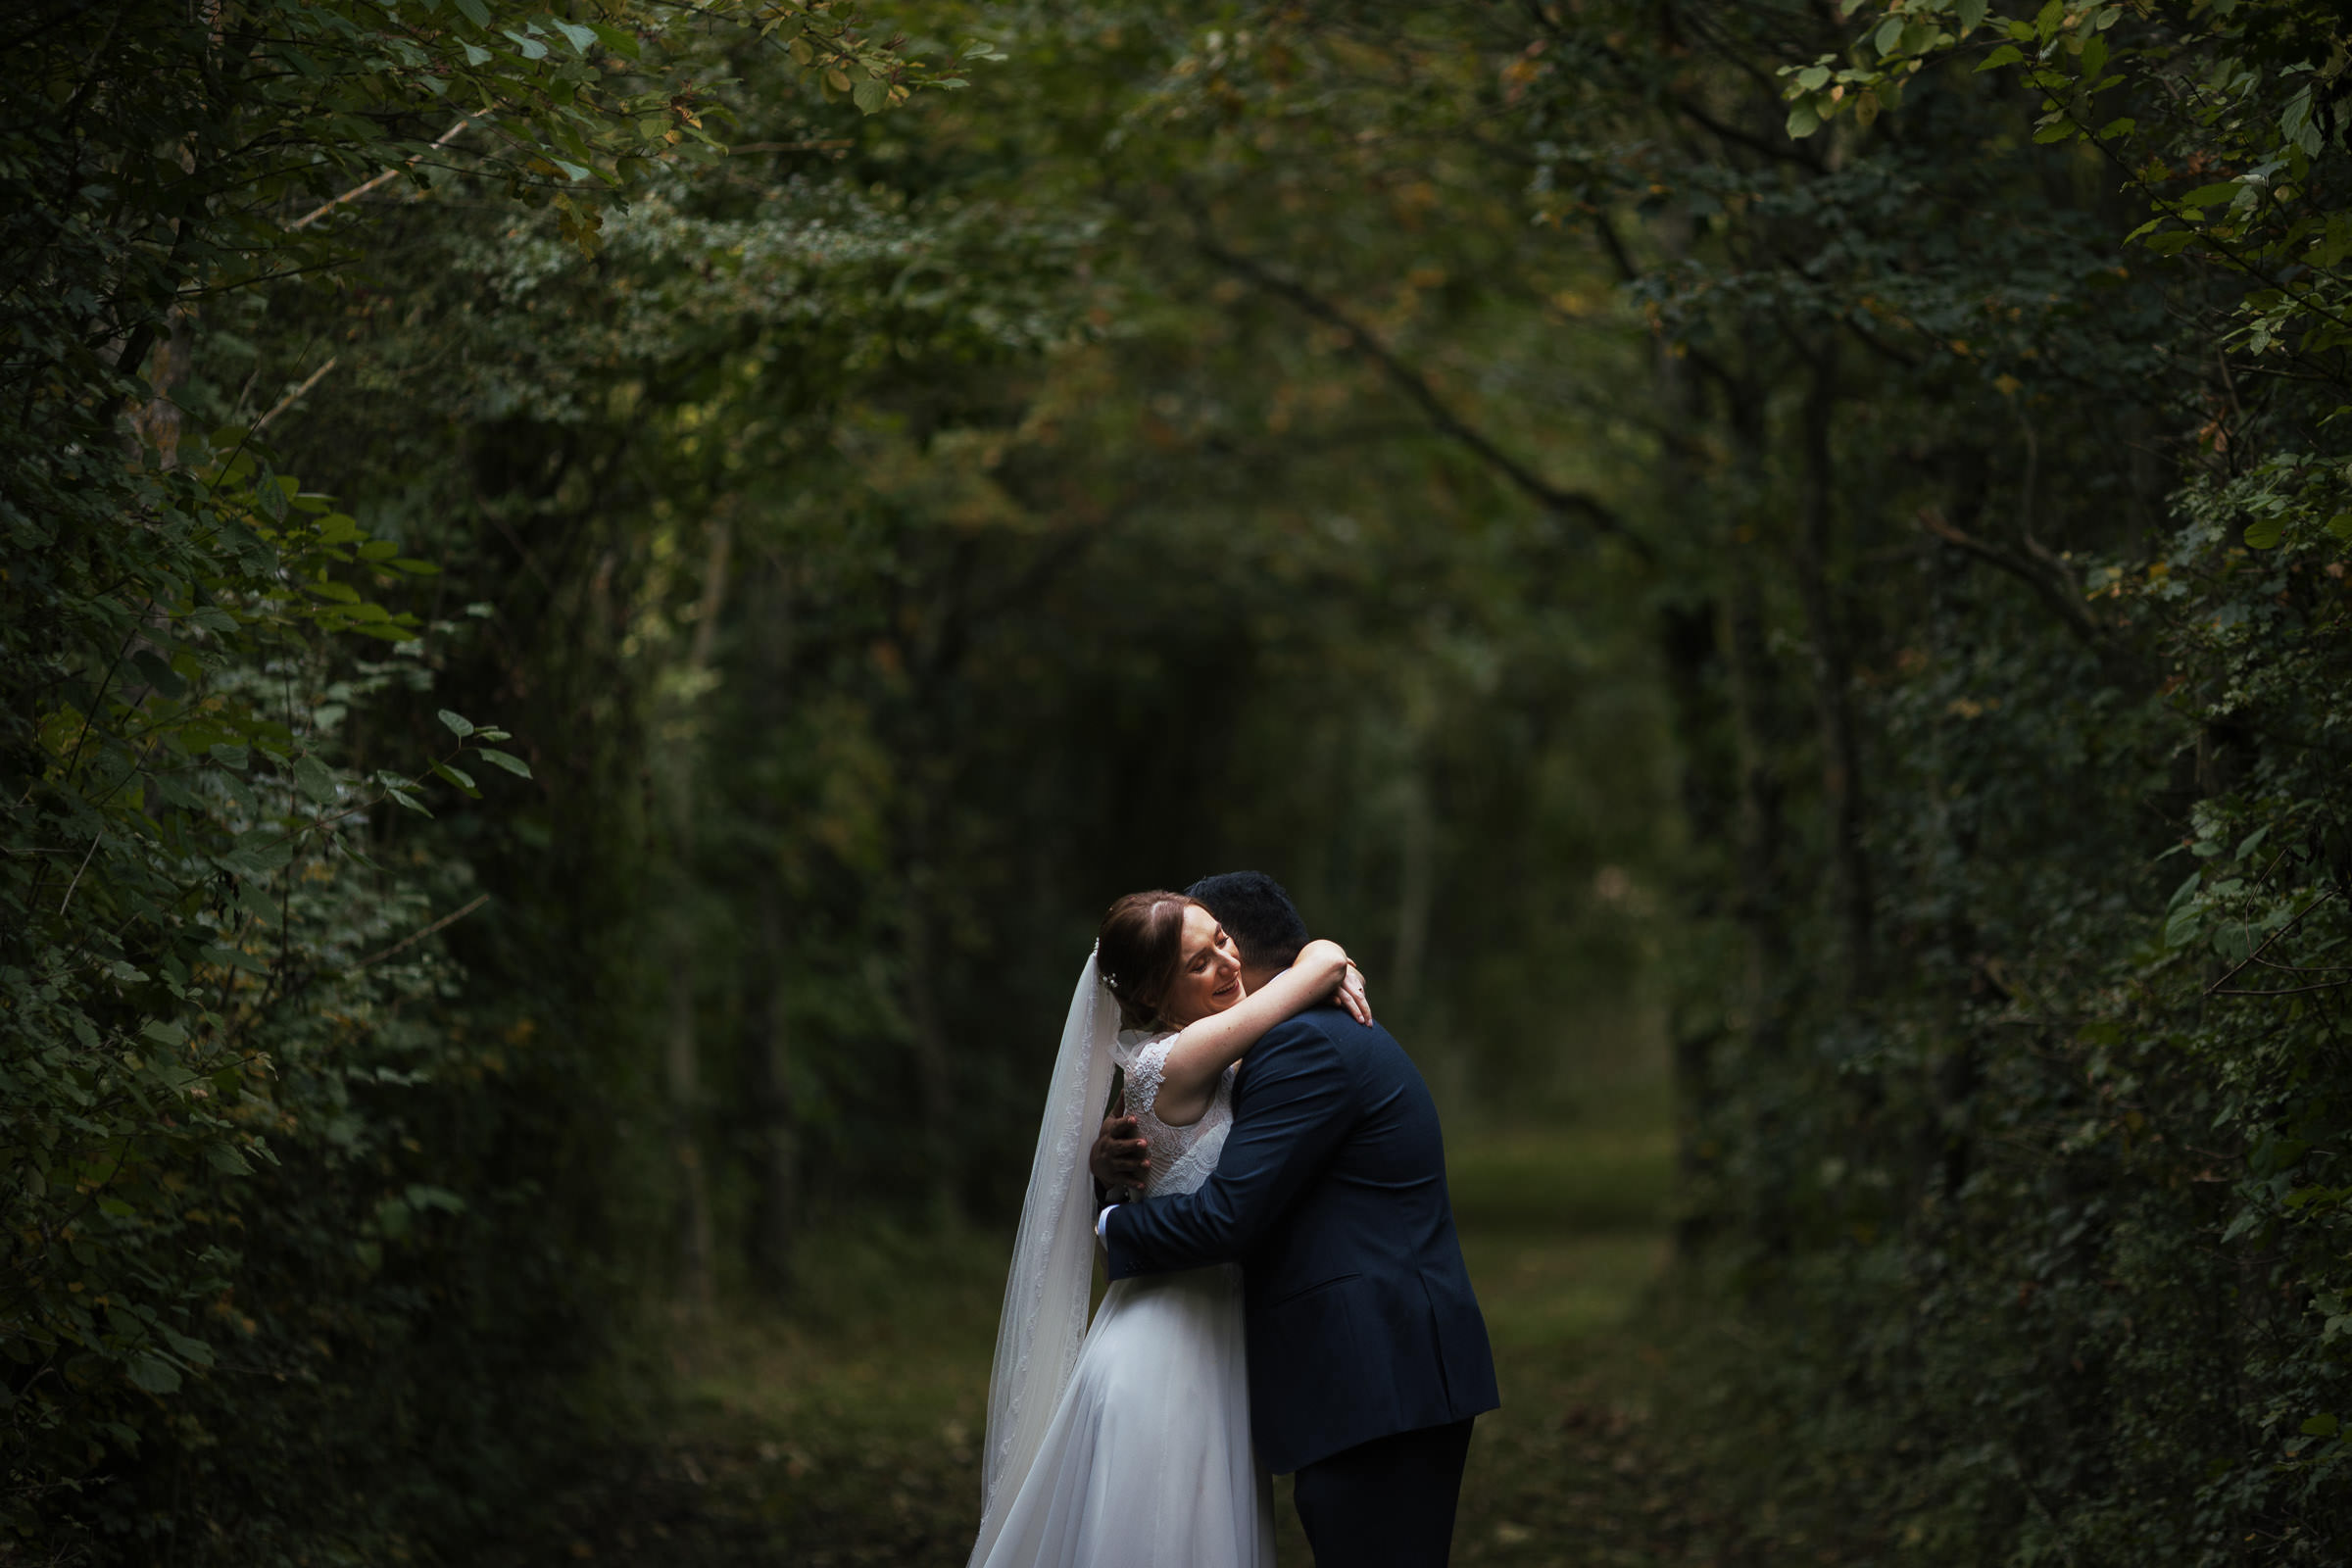 Newly married couple hug among the trees at Alpheton Hall Barns. An autumn wedding in Suffolk.